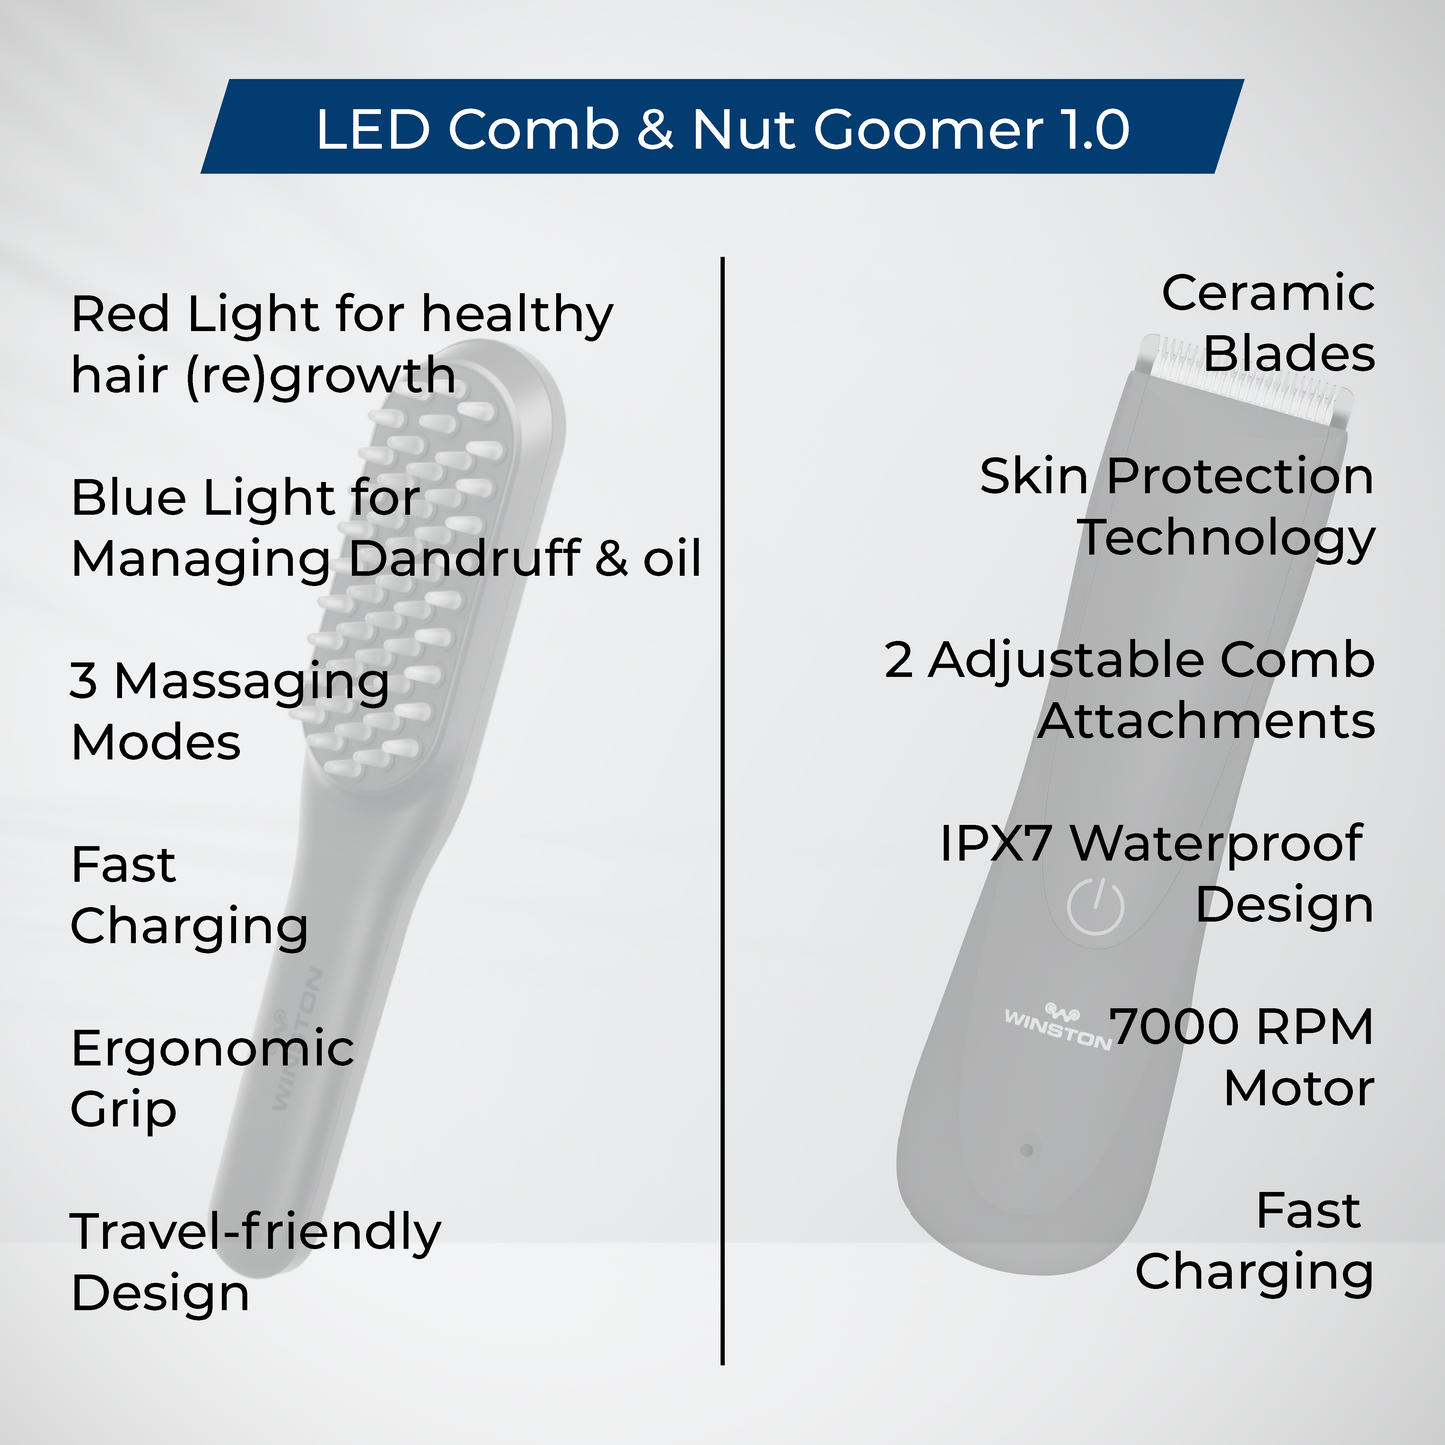 LED Comb & Nut Goomer 1.0 Combo